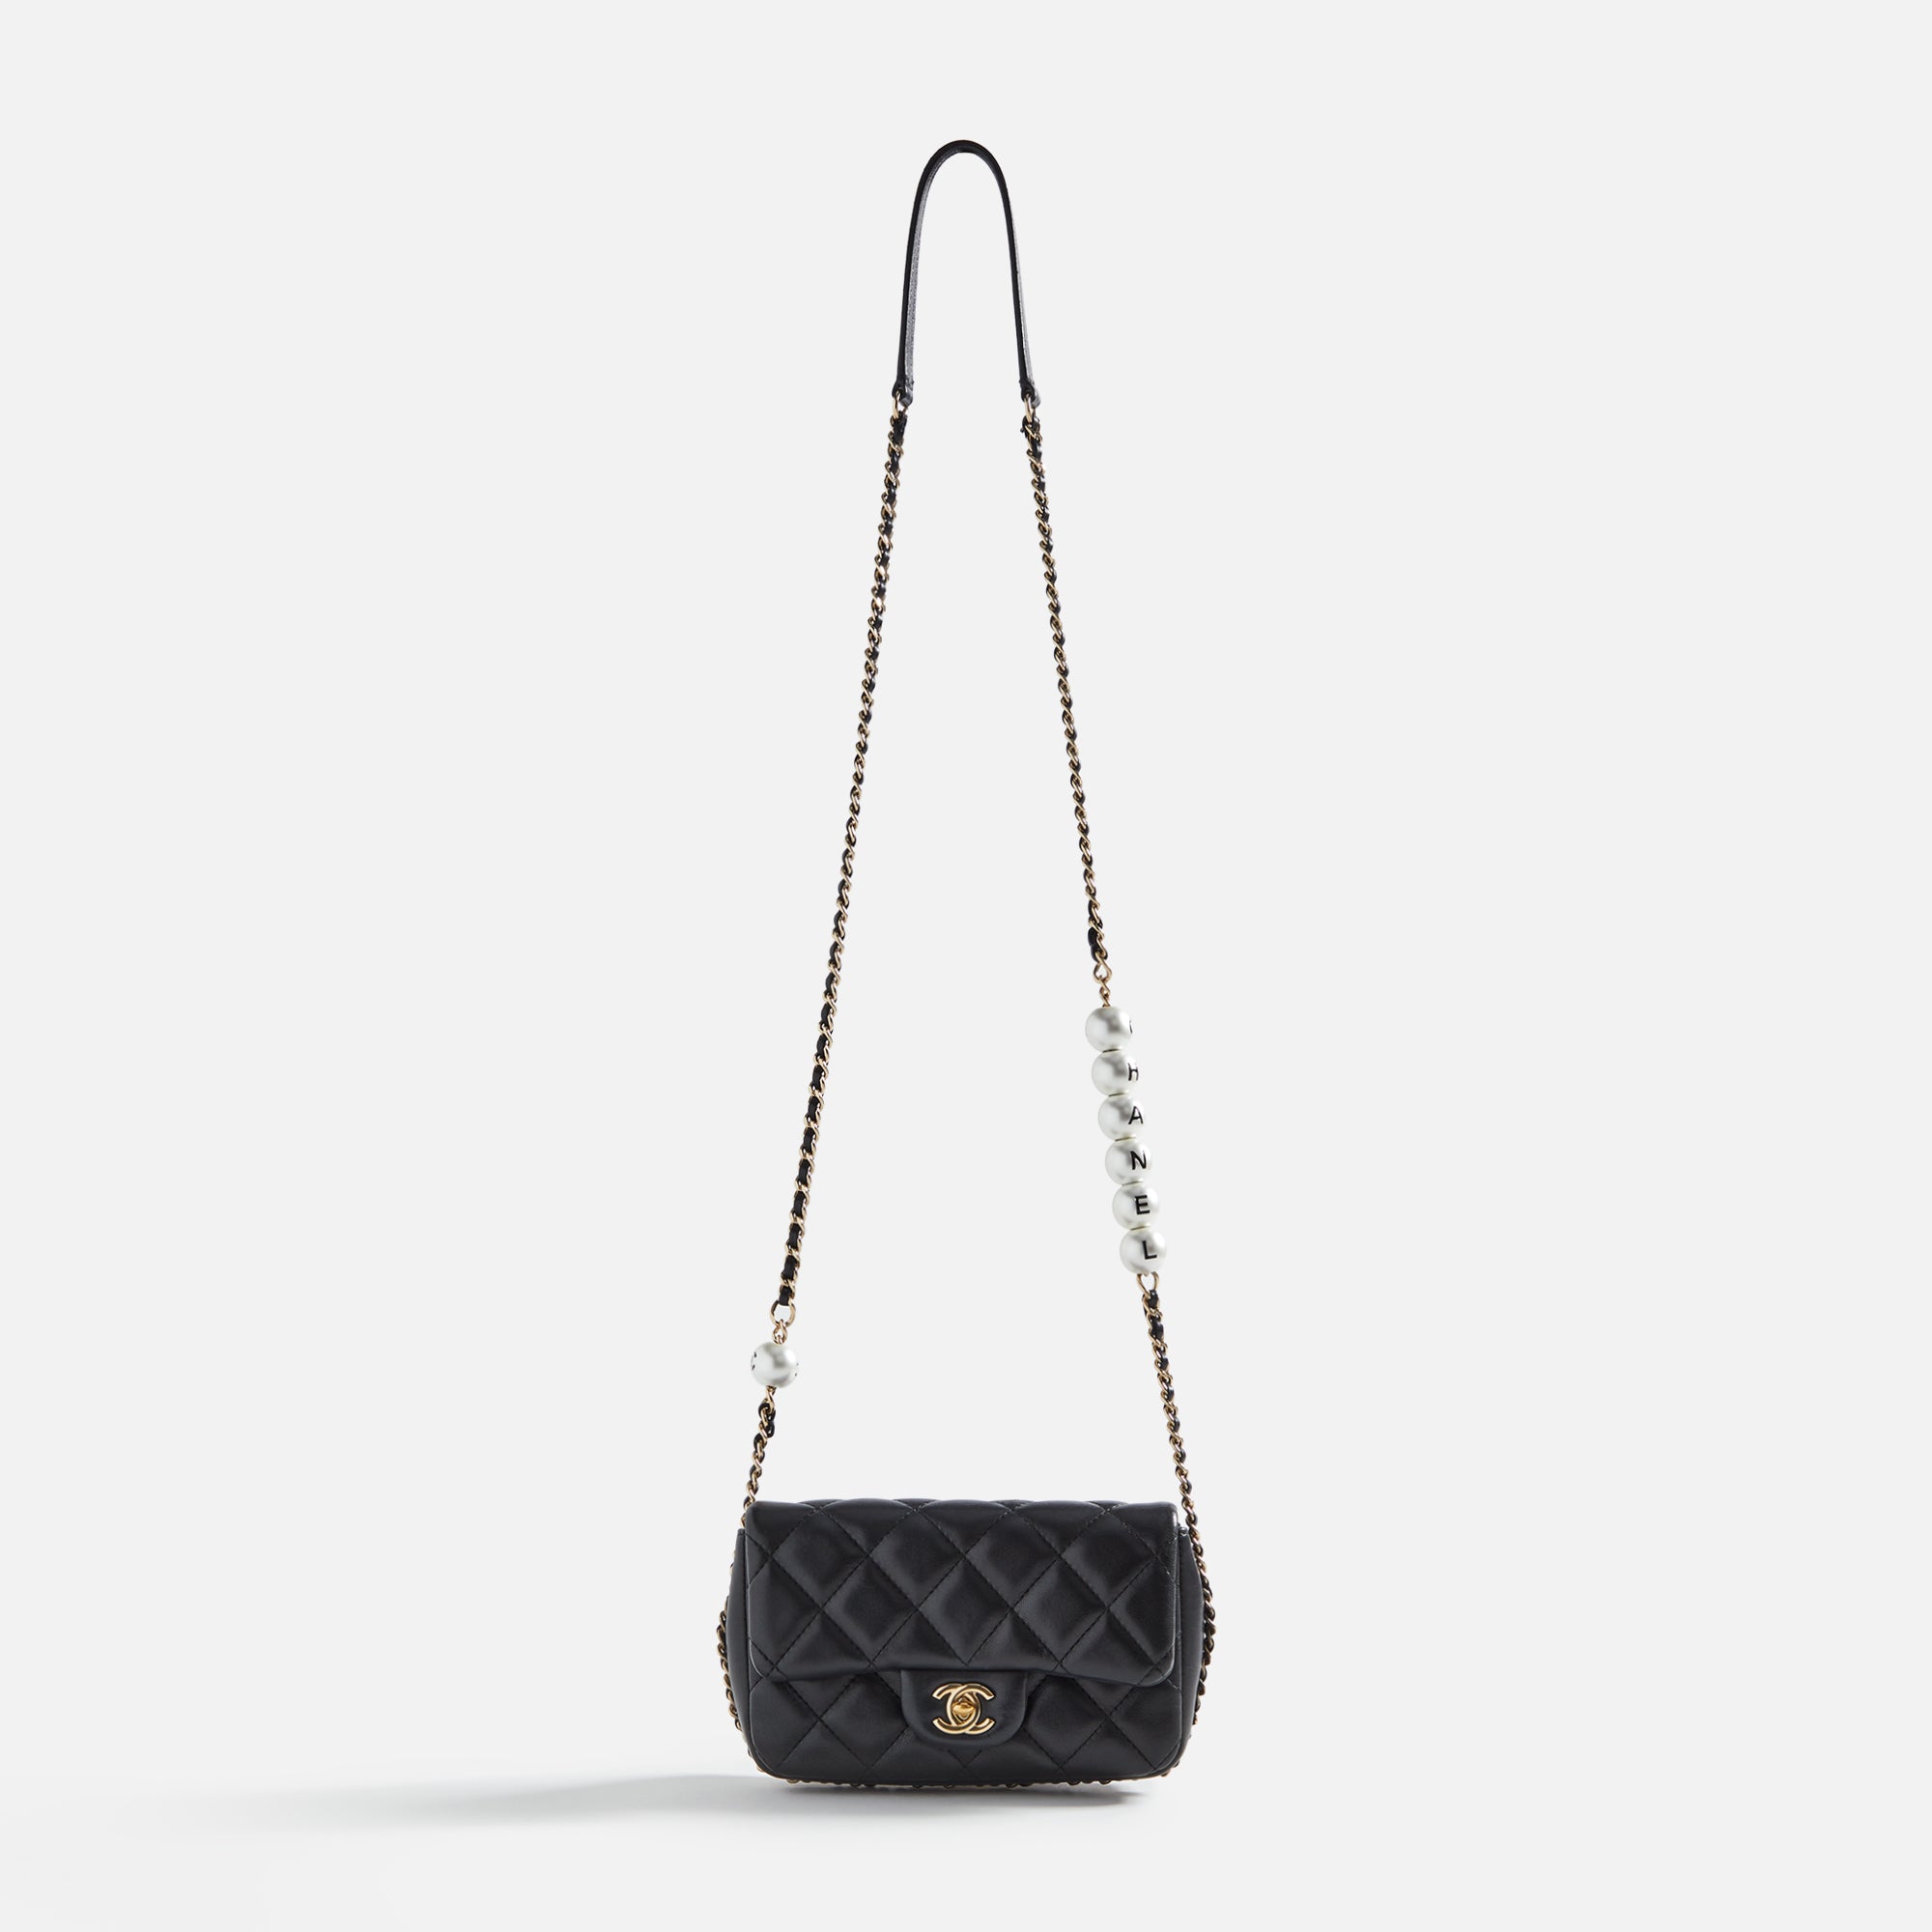 WGACA Chanel Sequin Small Half Flap Bag - Black